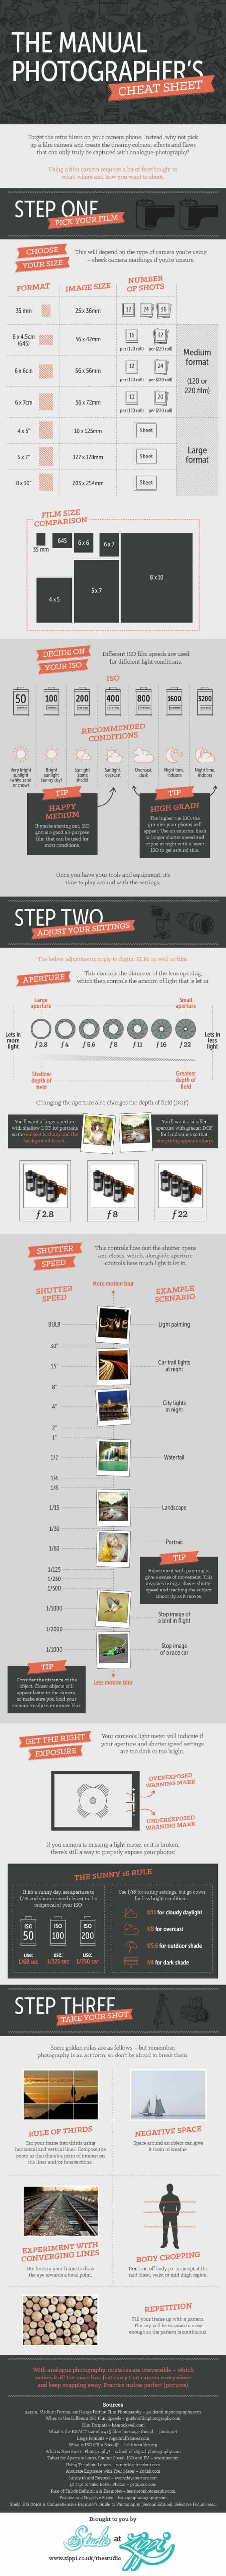 The basics of how to use a manual camera